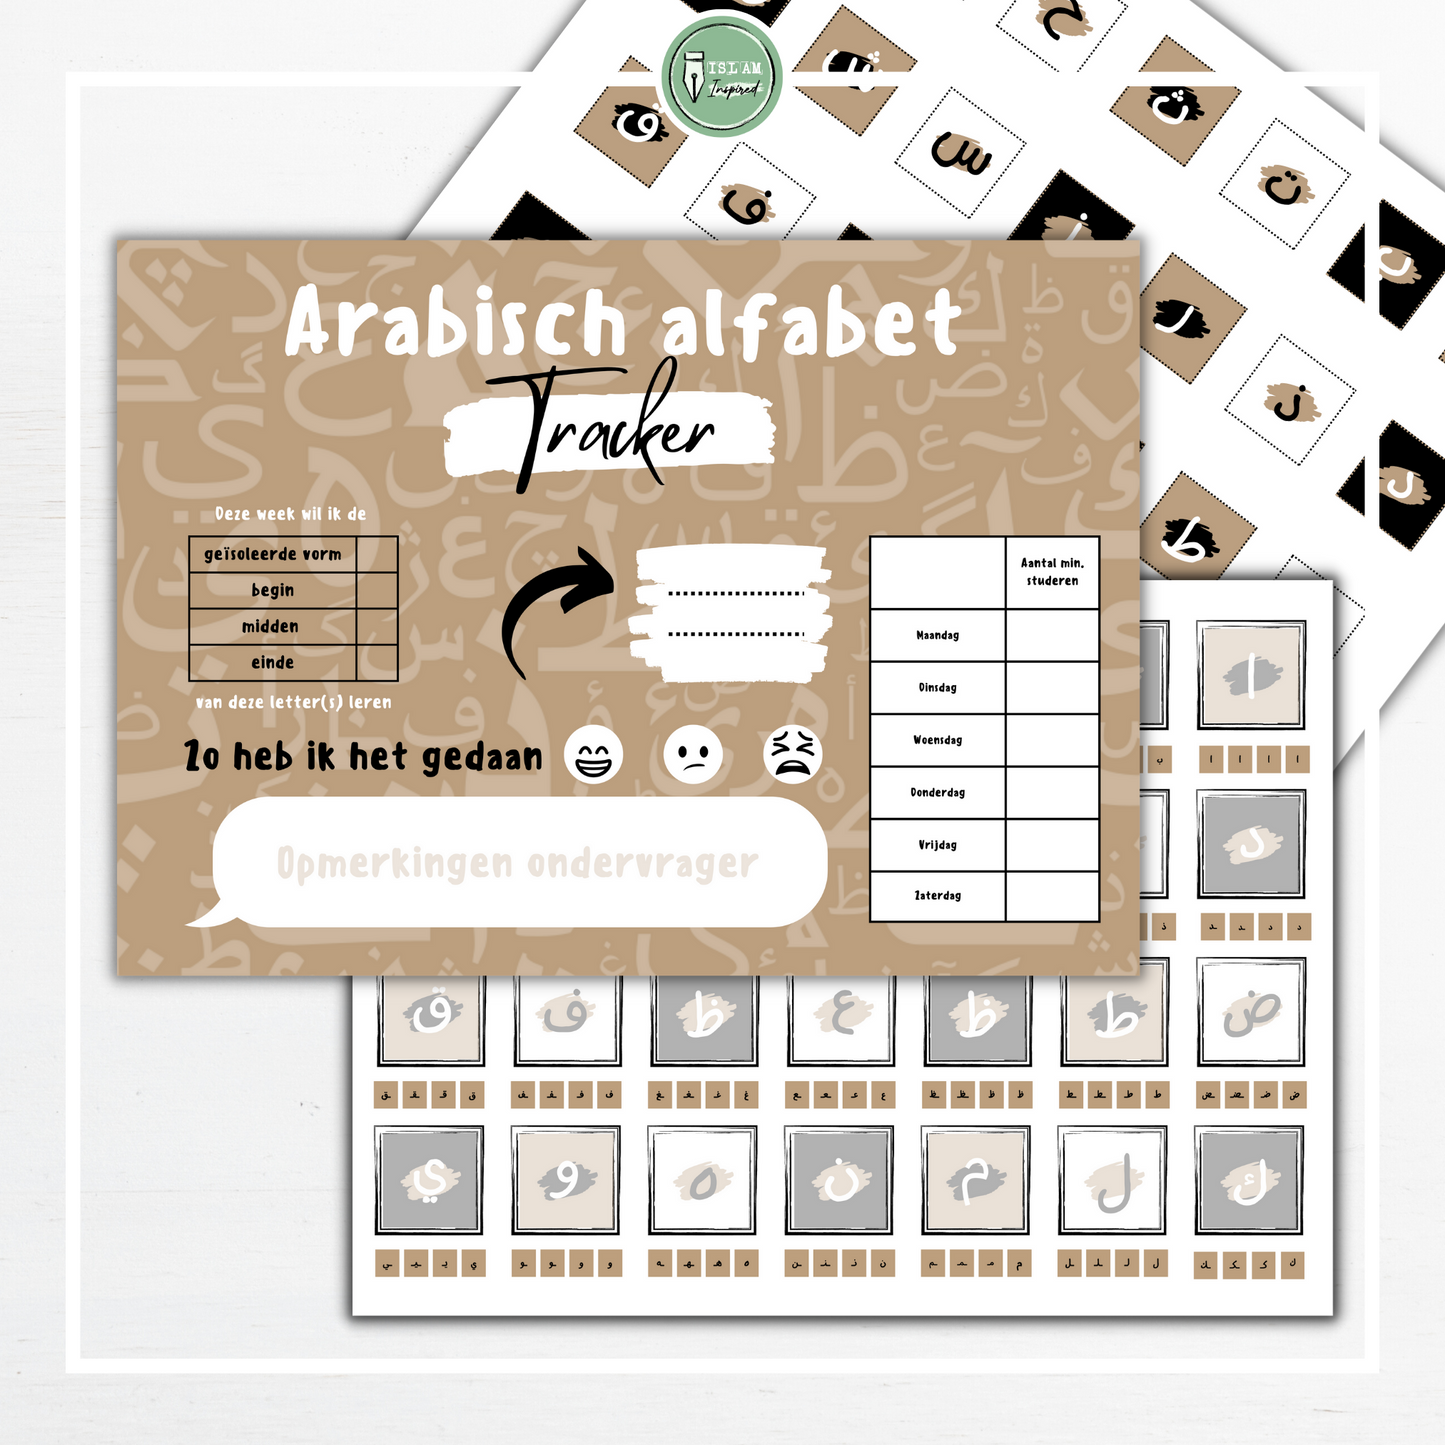 Arabisch alfabet tracker